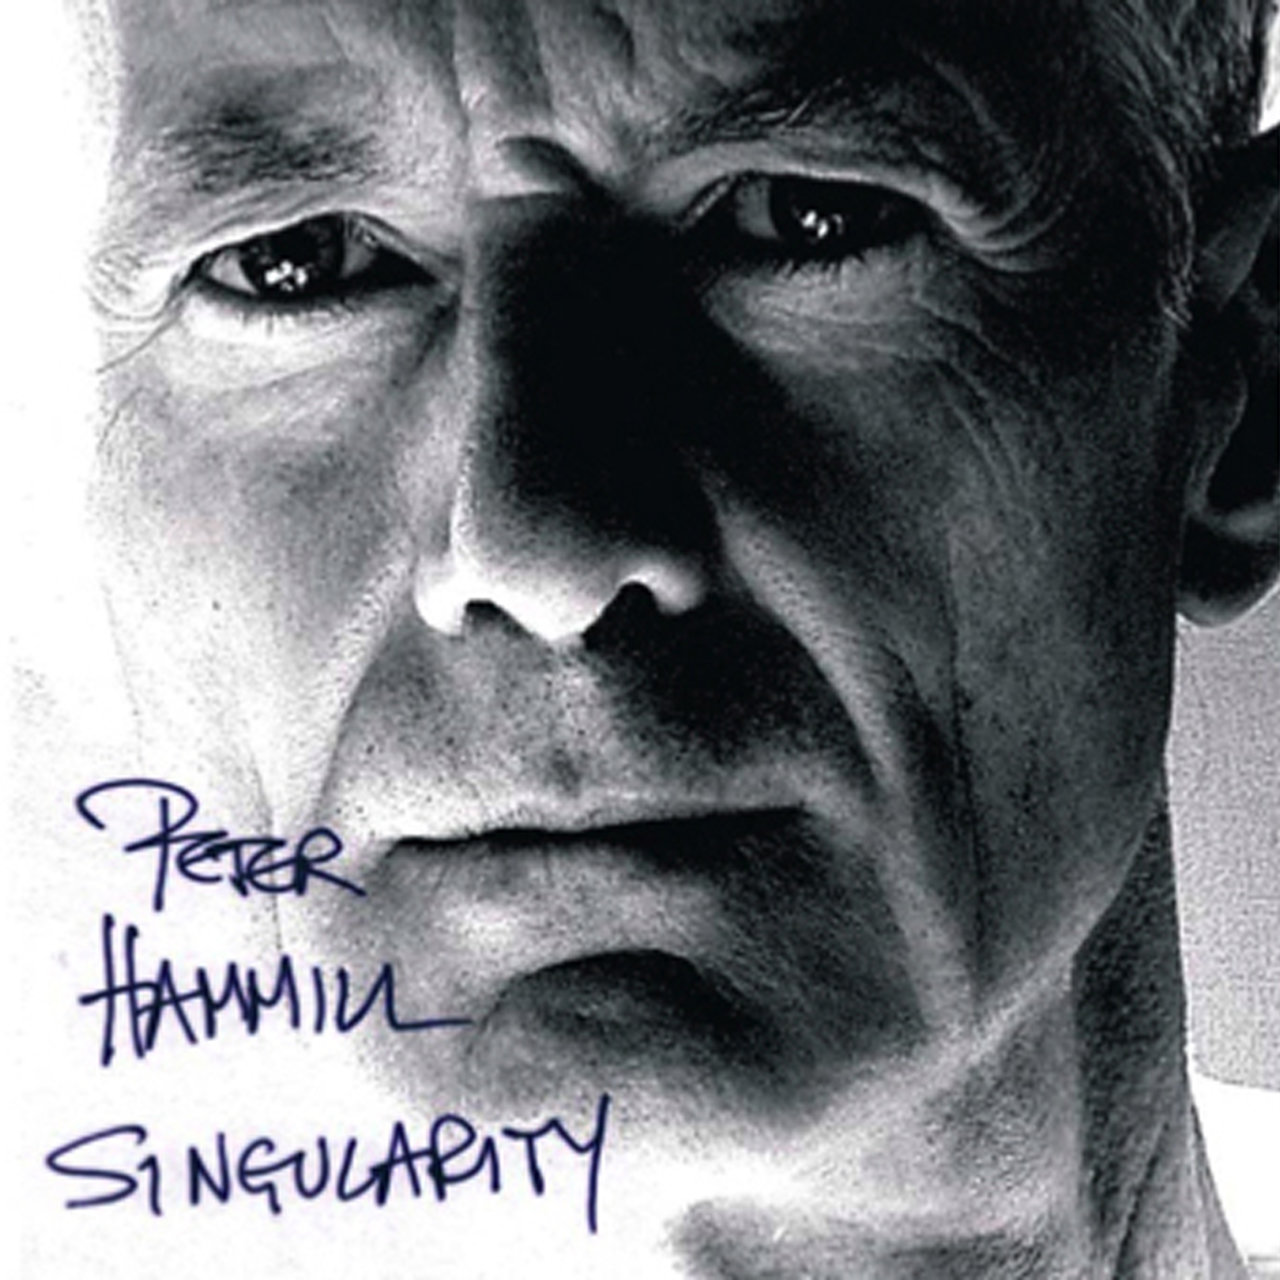 Peter Hammill - Singularity (2006)